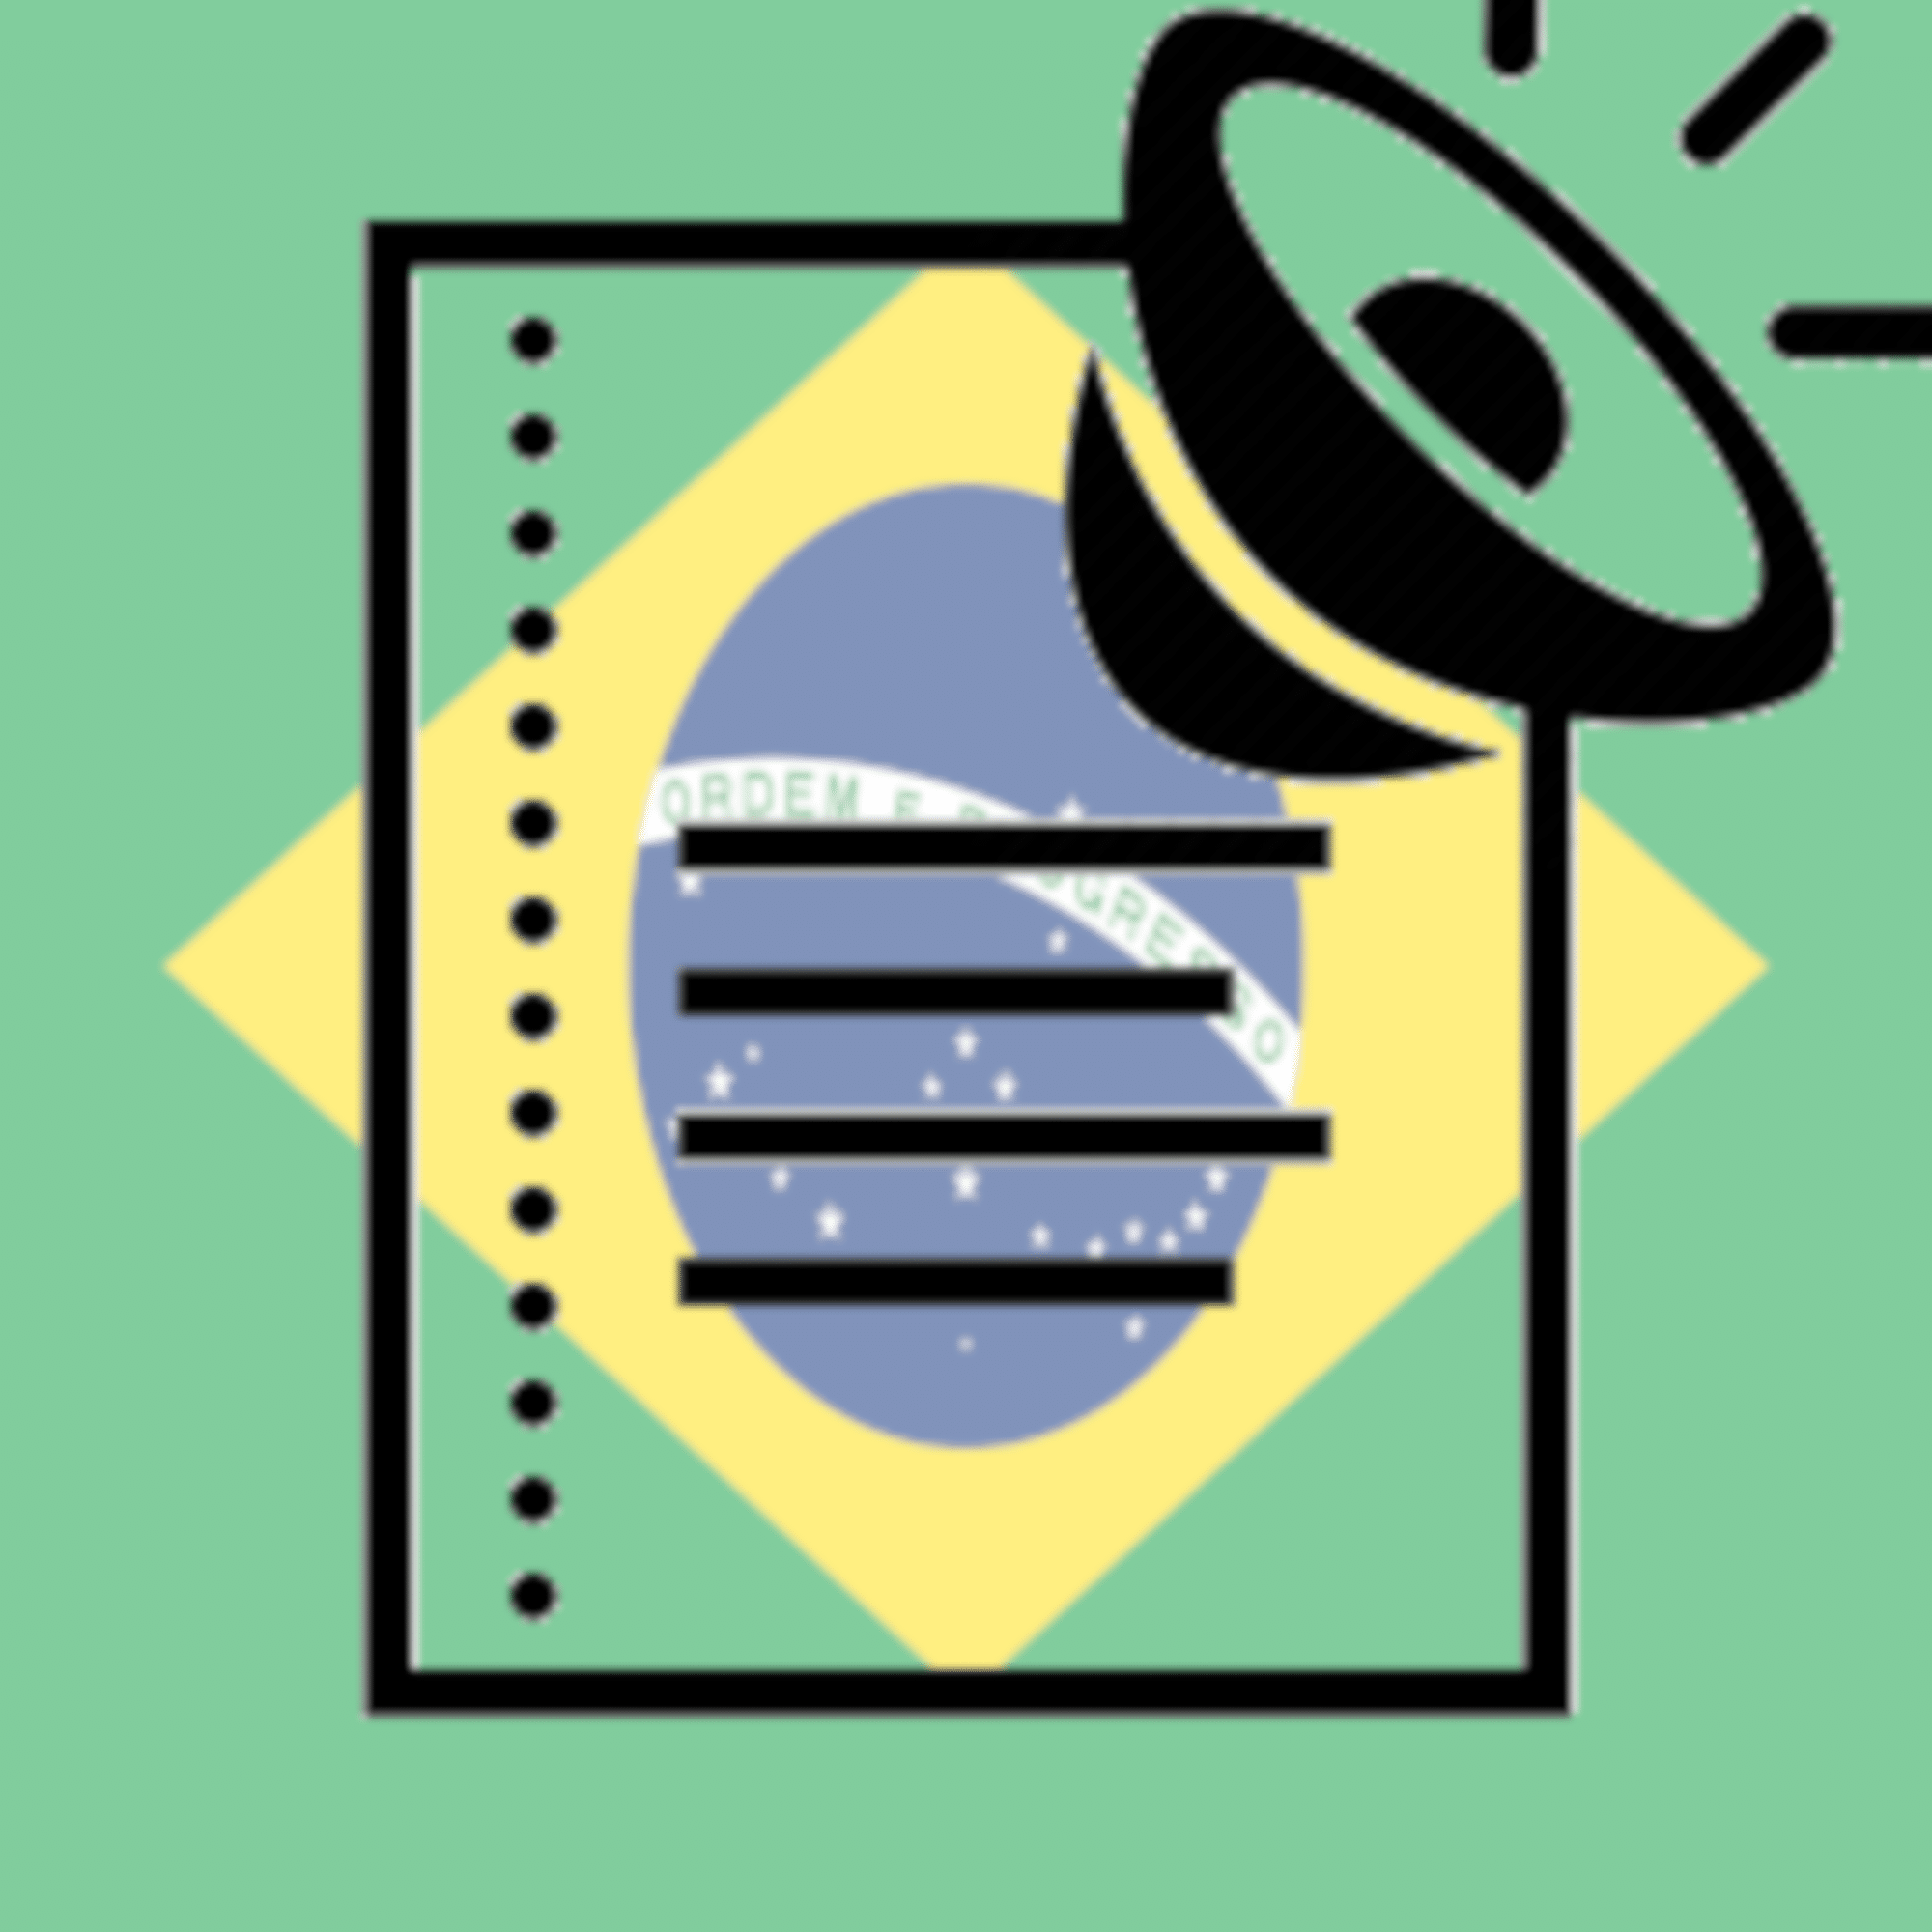 brasil-tts-sintetizador-voz-em-portugues-para-deficientes-visuais-linux